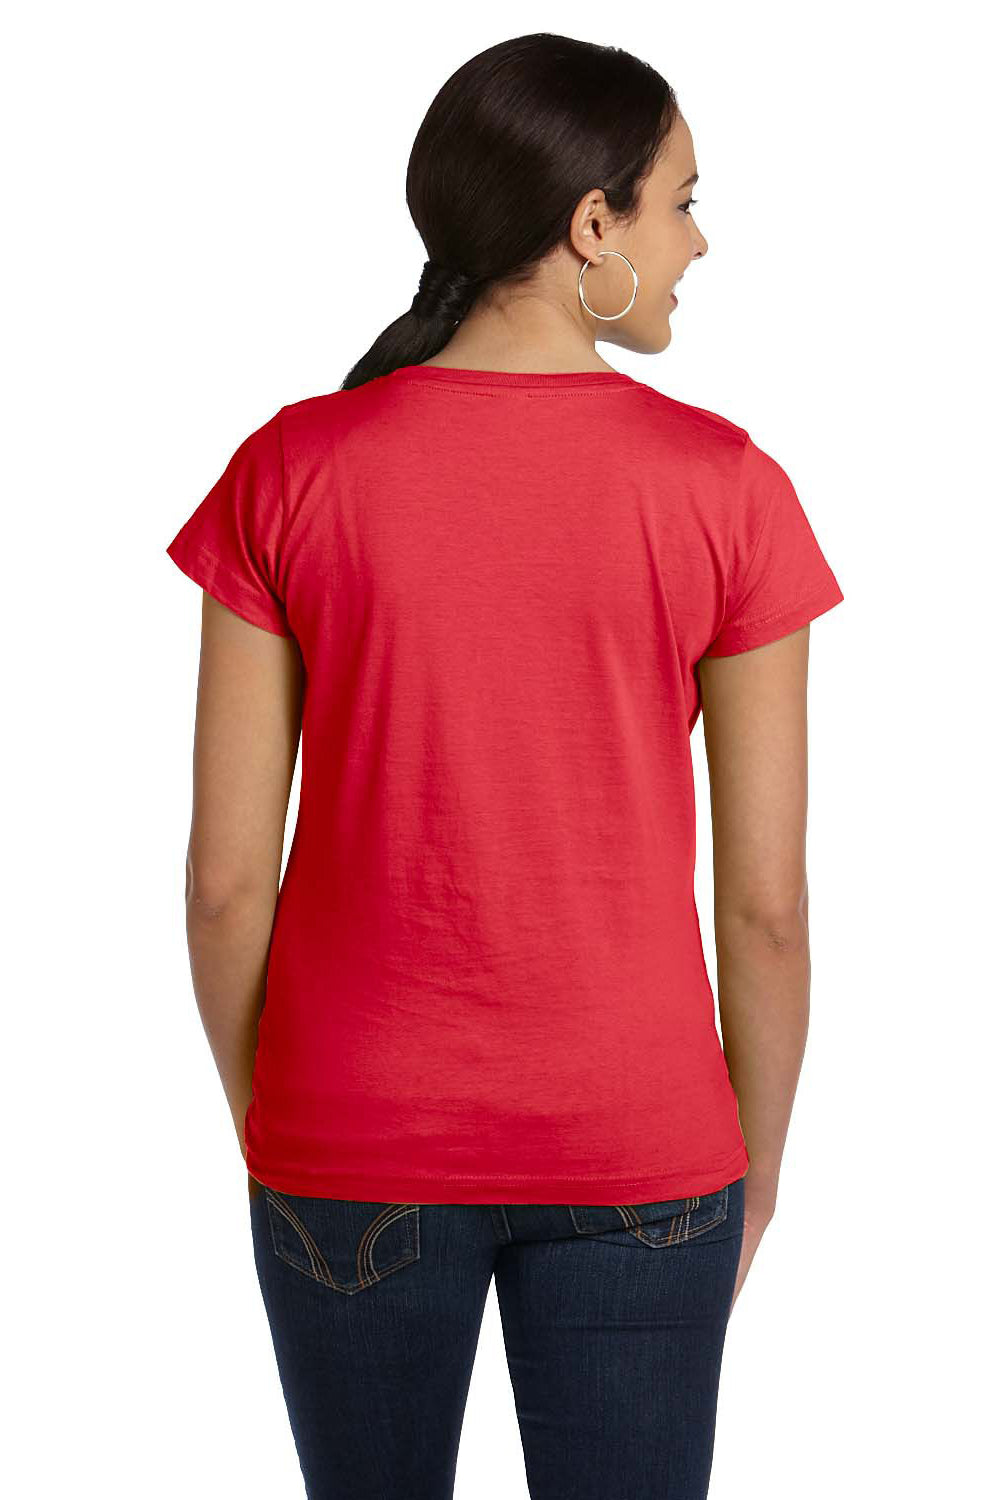 LAT 3516 Womens Fine Jersey Short Sleeve Crewneck T-Shirt Red Back